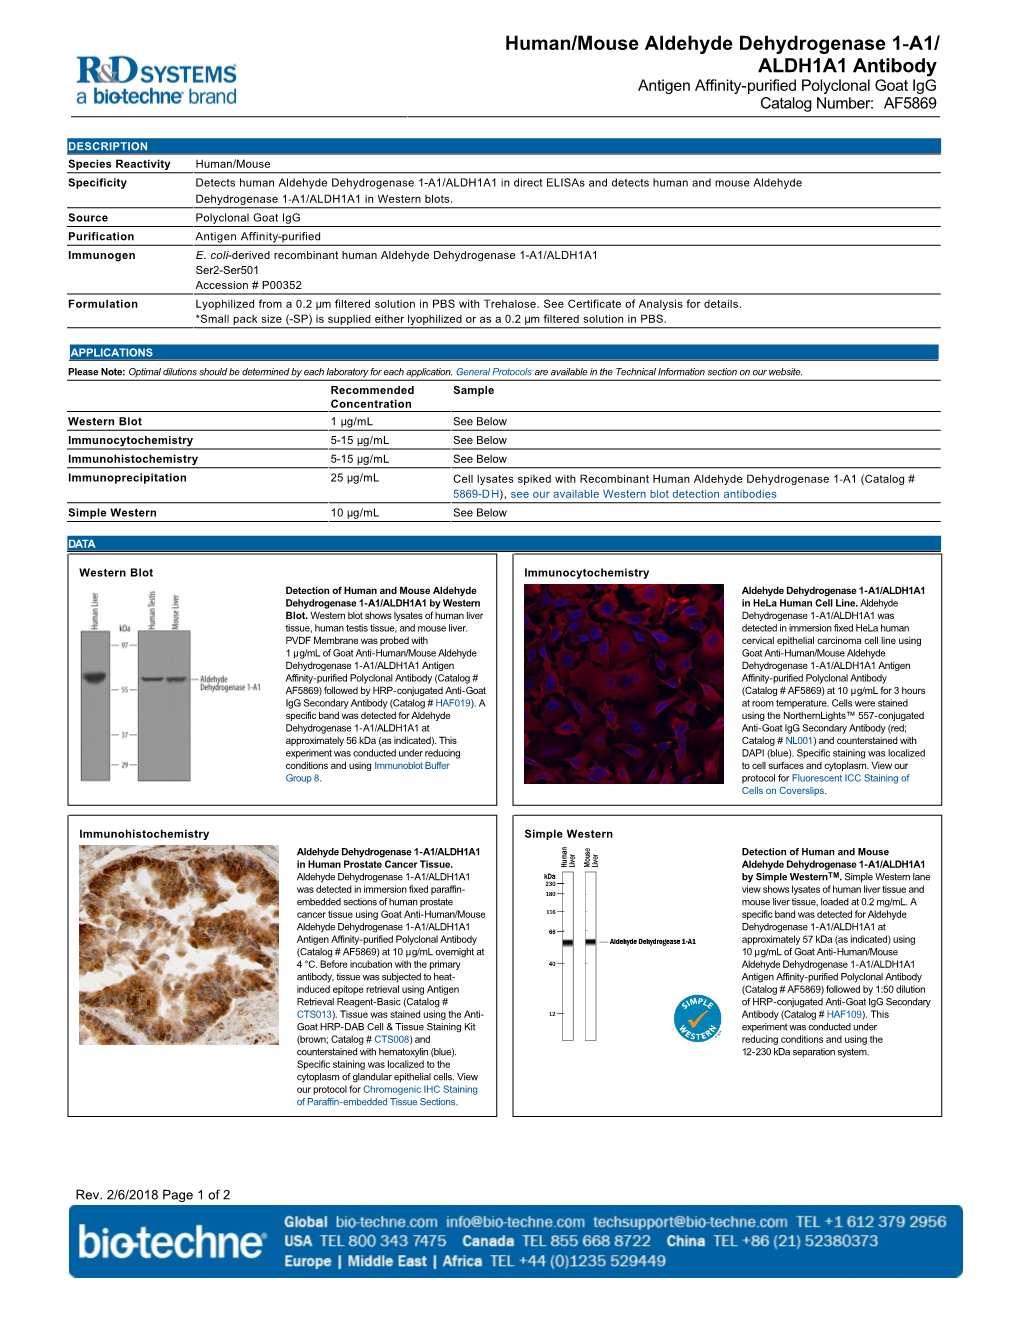 Human/Mouse Aldehyde Dehydrogenase 1-A1/ ALDH1A1 Antibody Antigen Affinity-Purified Polyclonal Goat Igg Catalog Number: AF5869